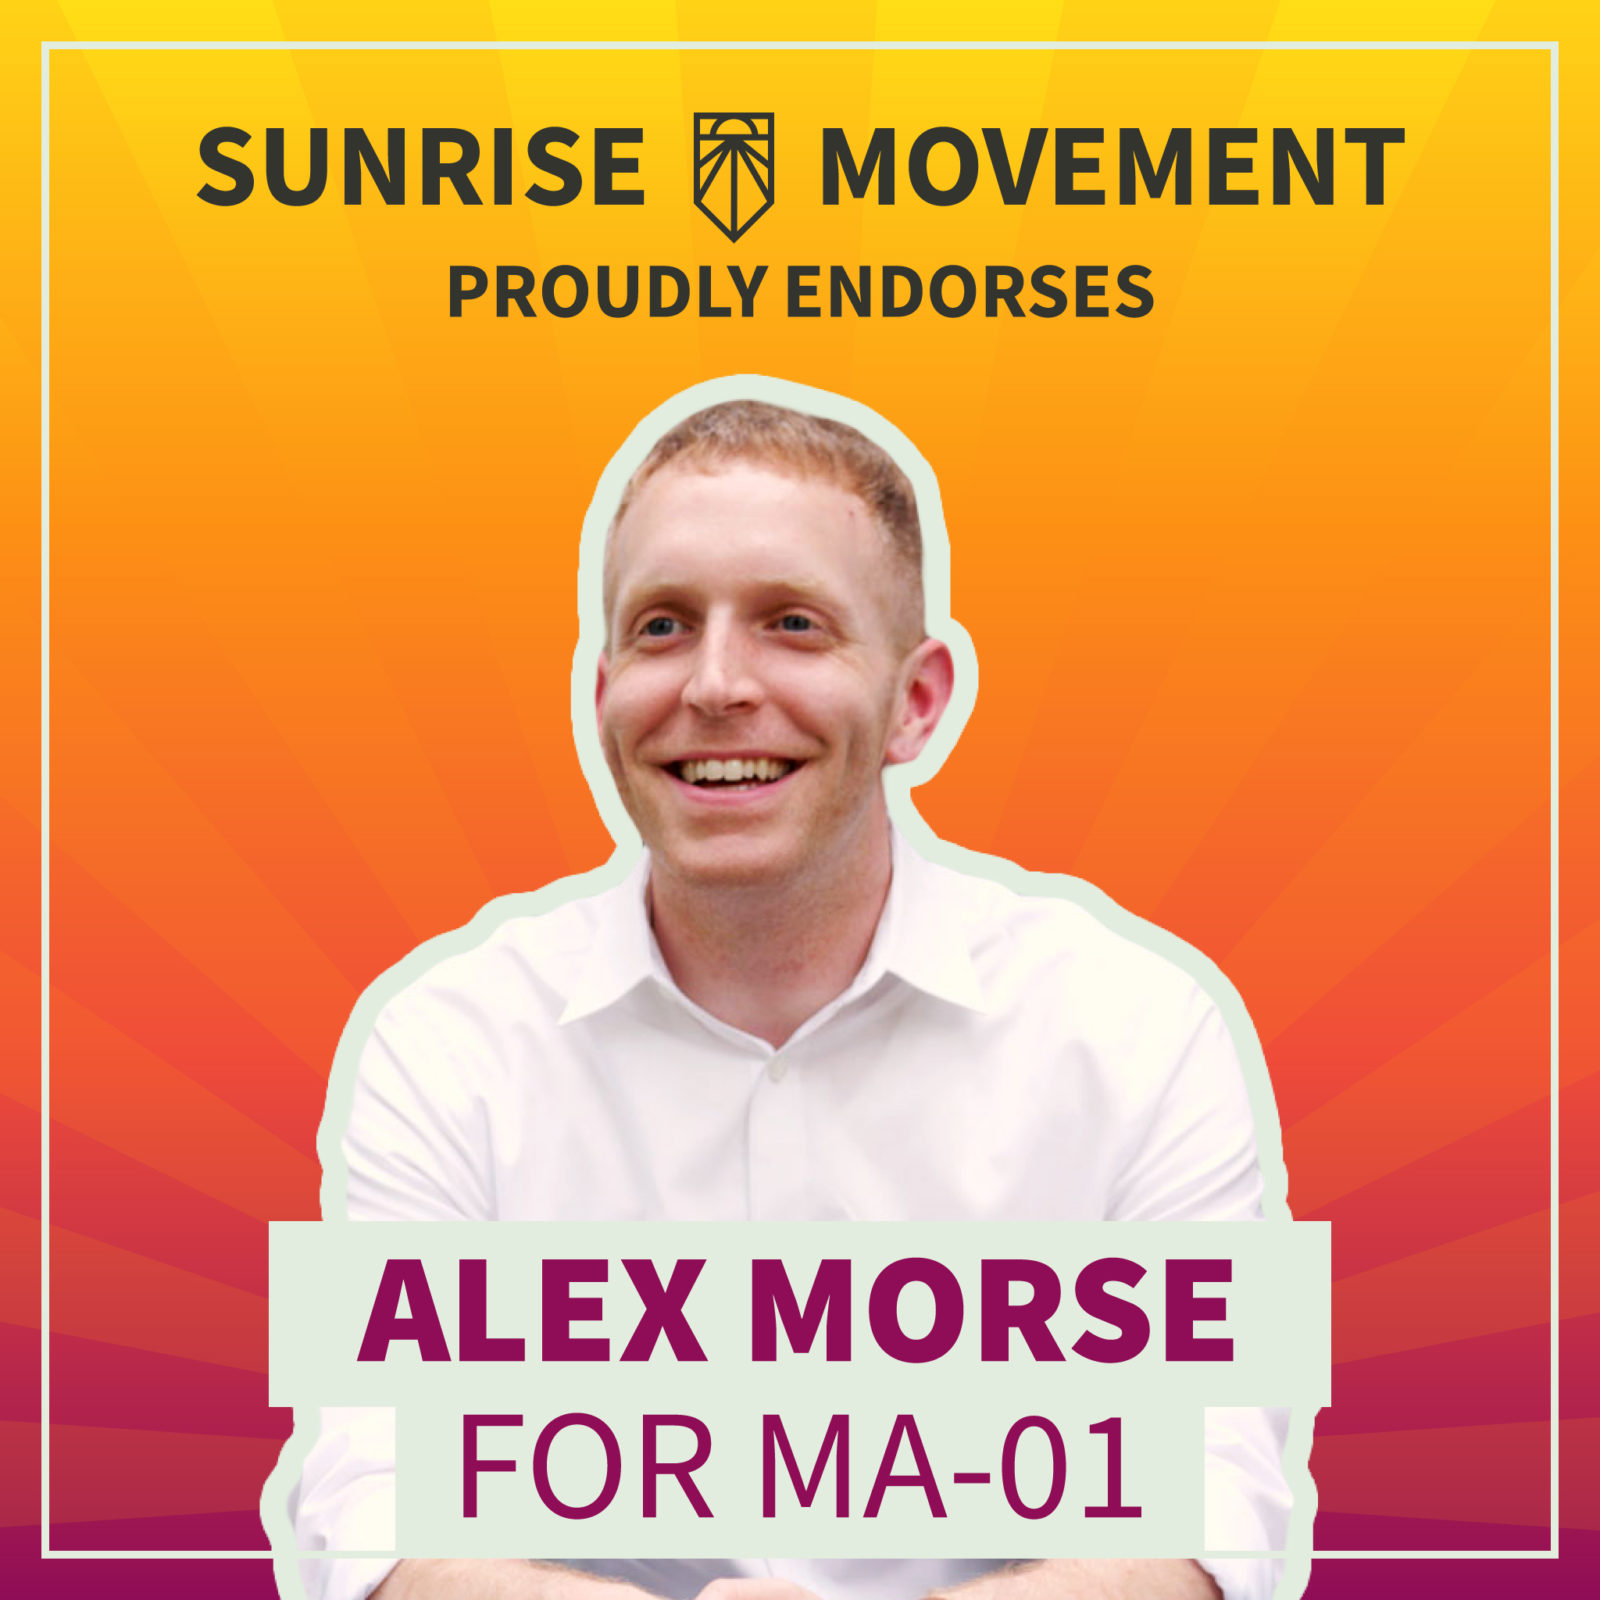 A photo of Alex Morse with text: Sunrise Movement proudly endorses Alex Morse for MA-01